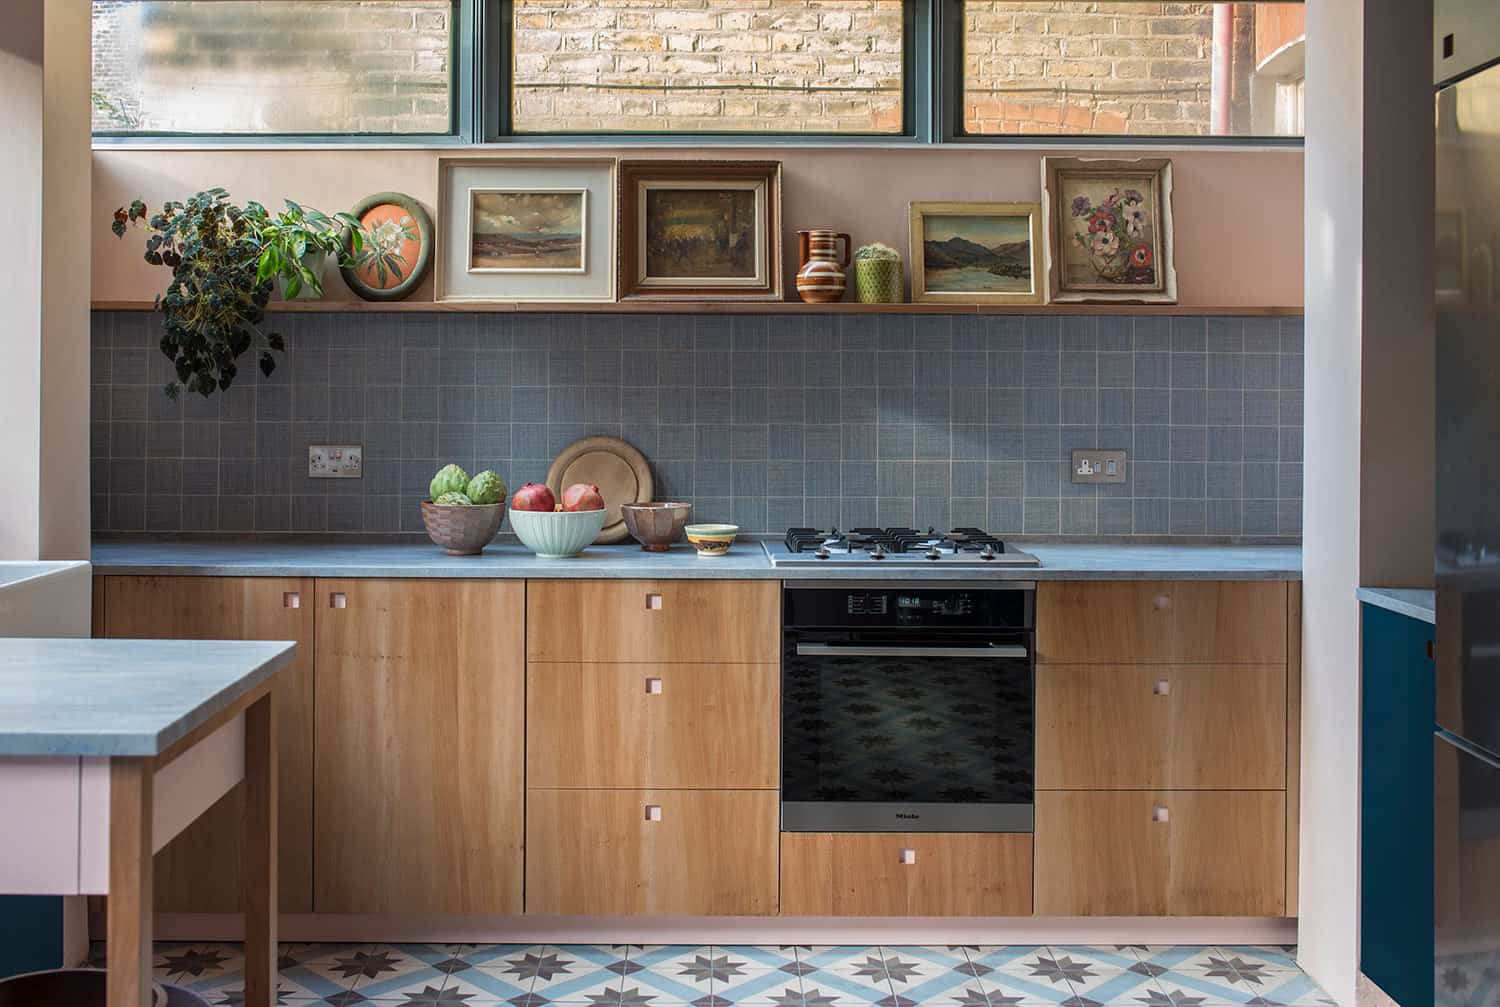 Stylish simple kitchens